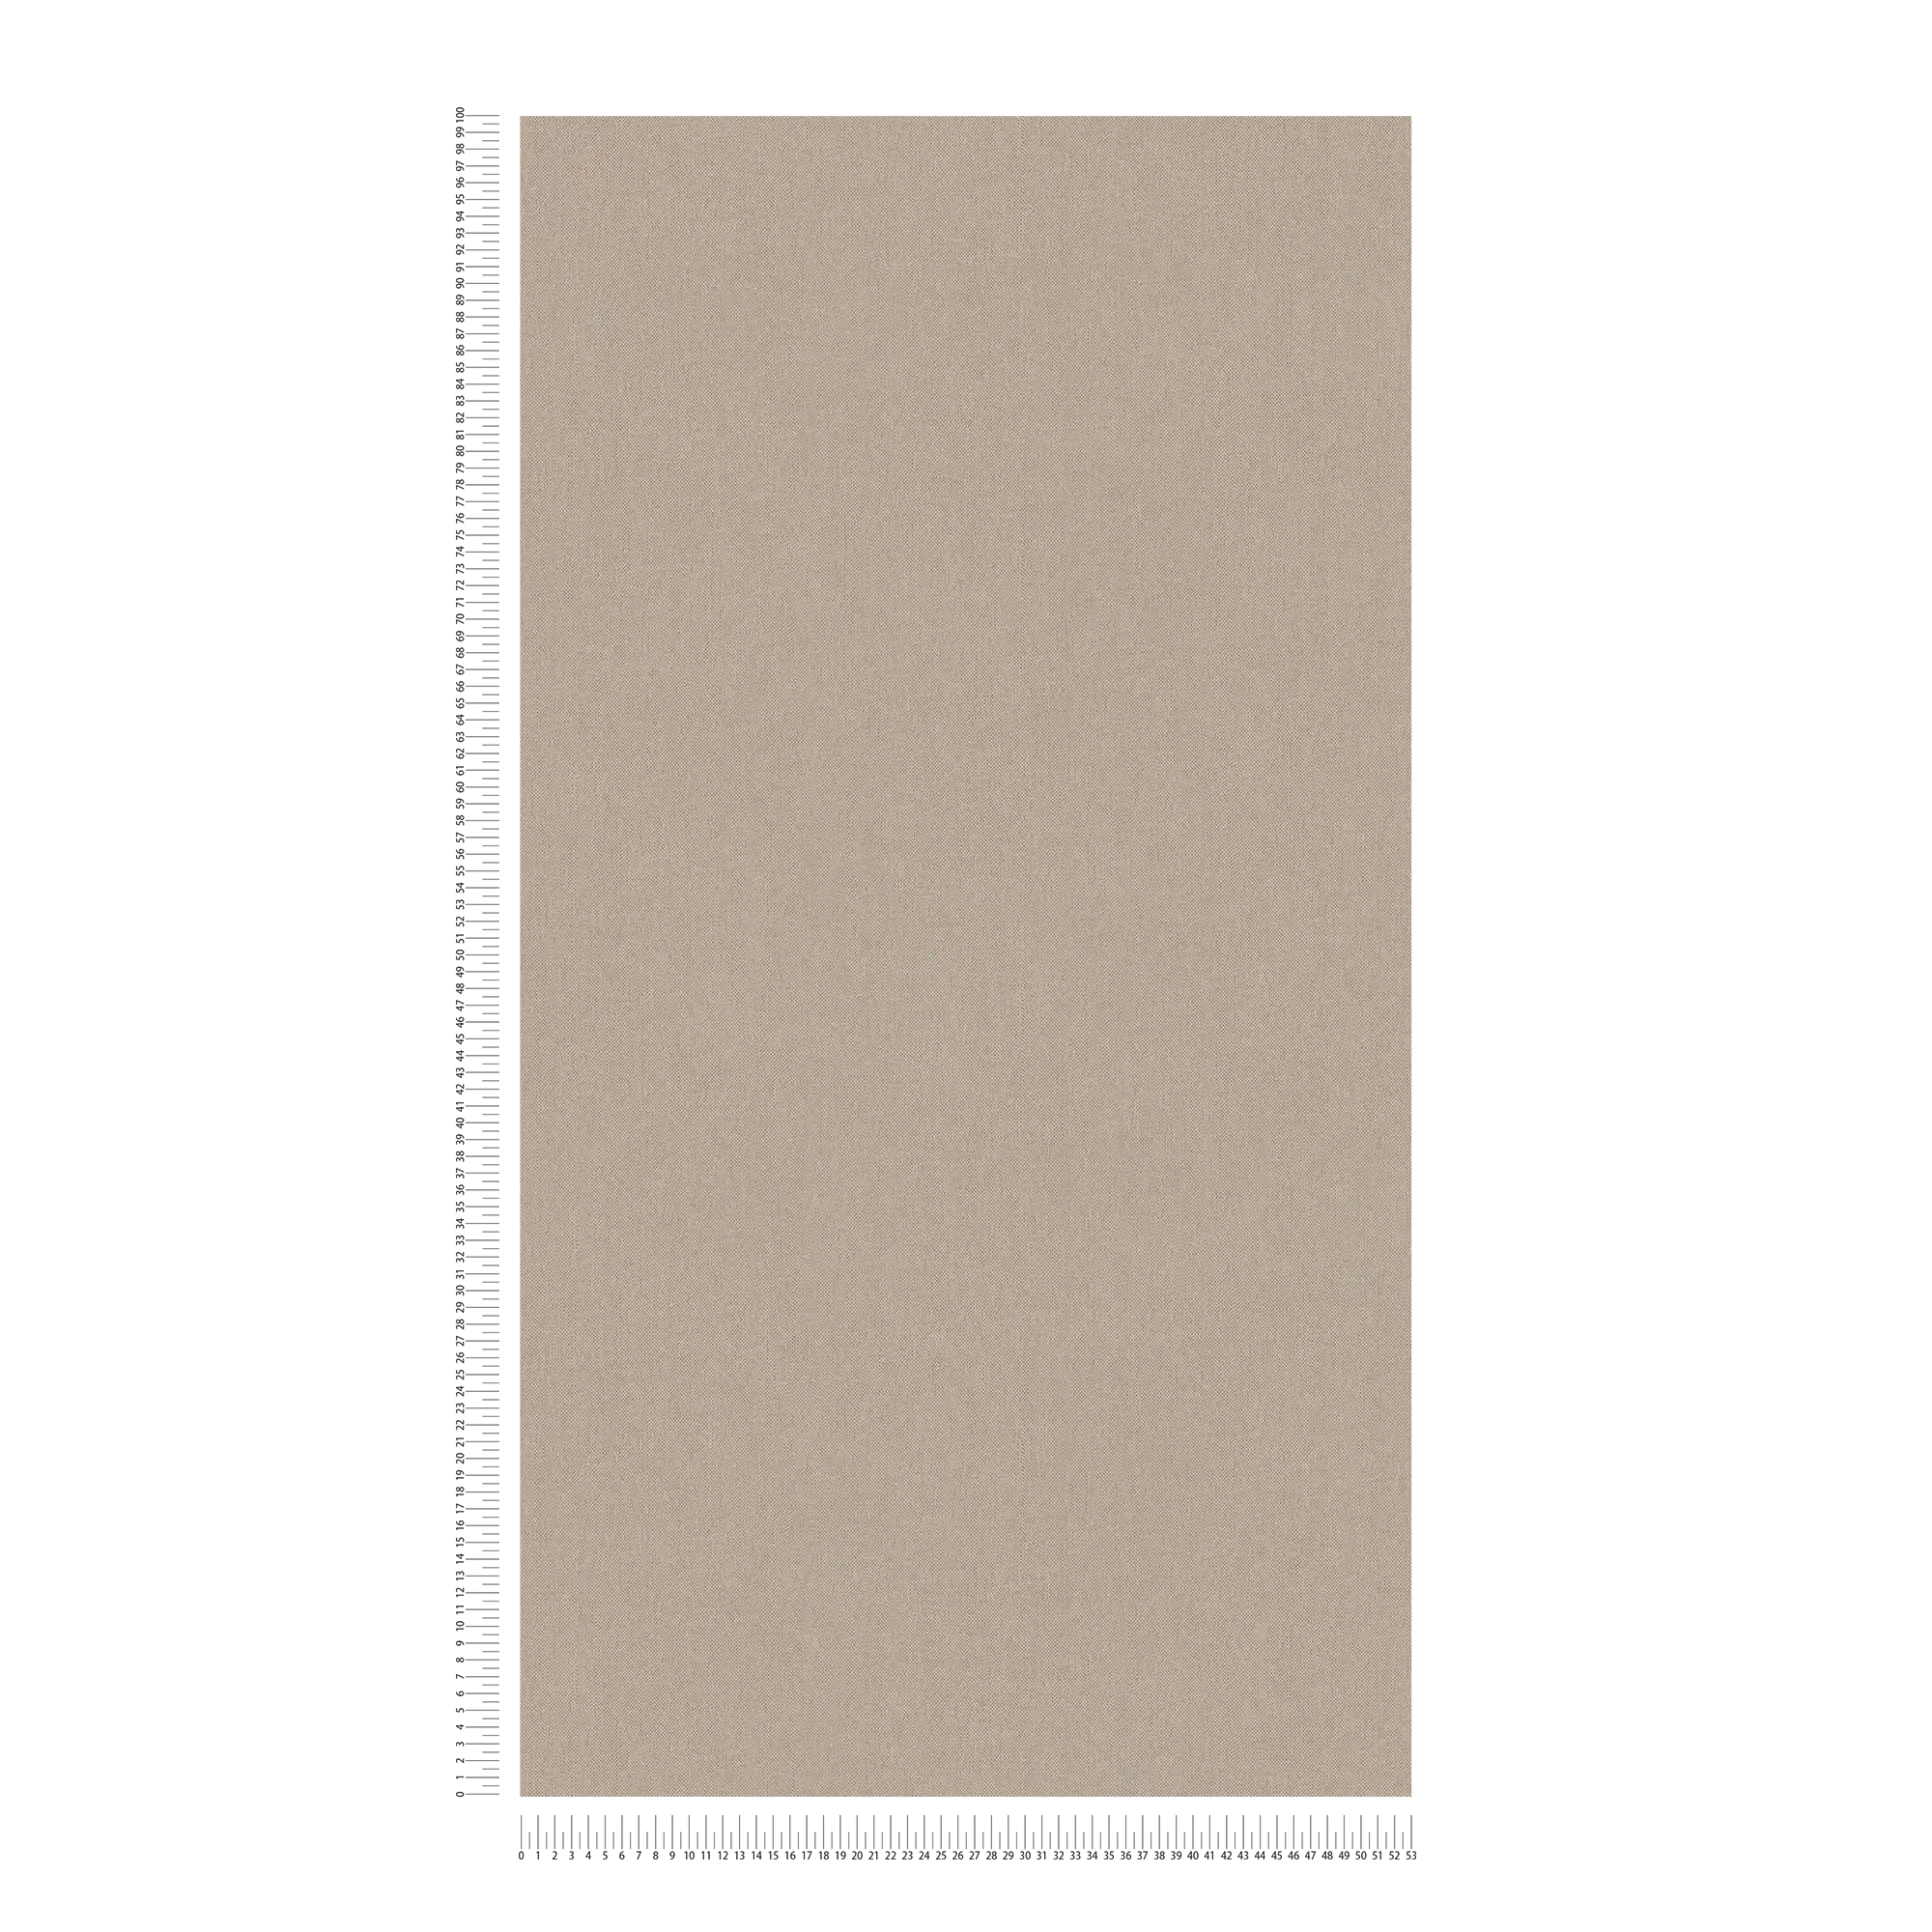             Non-woven wallpaper beige plain & matt with textile texture - beige, brown
        